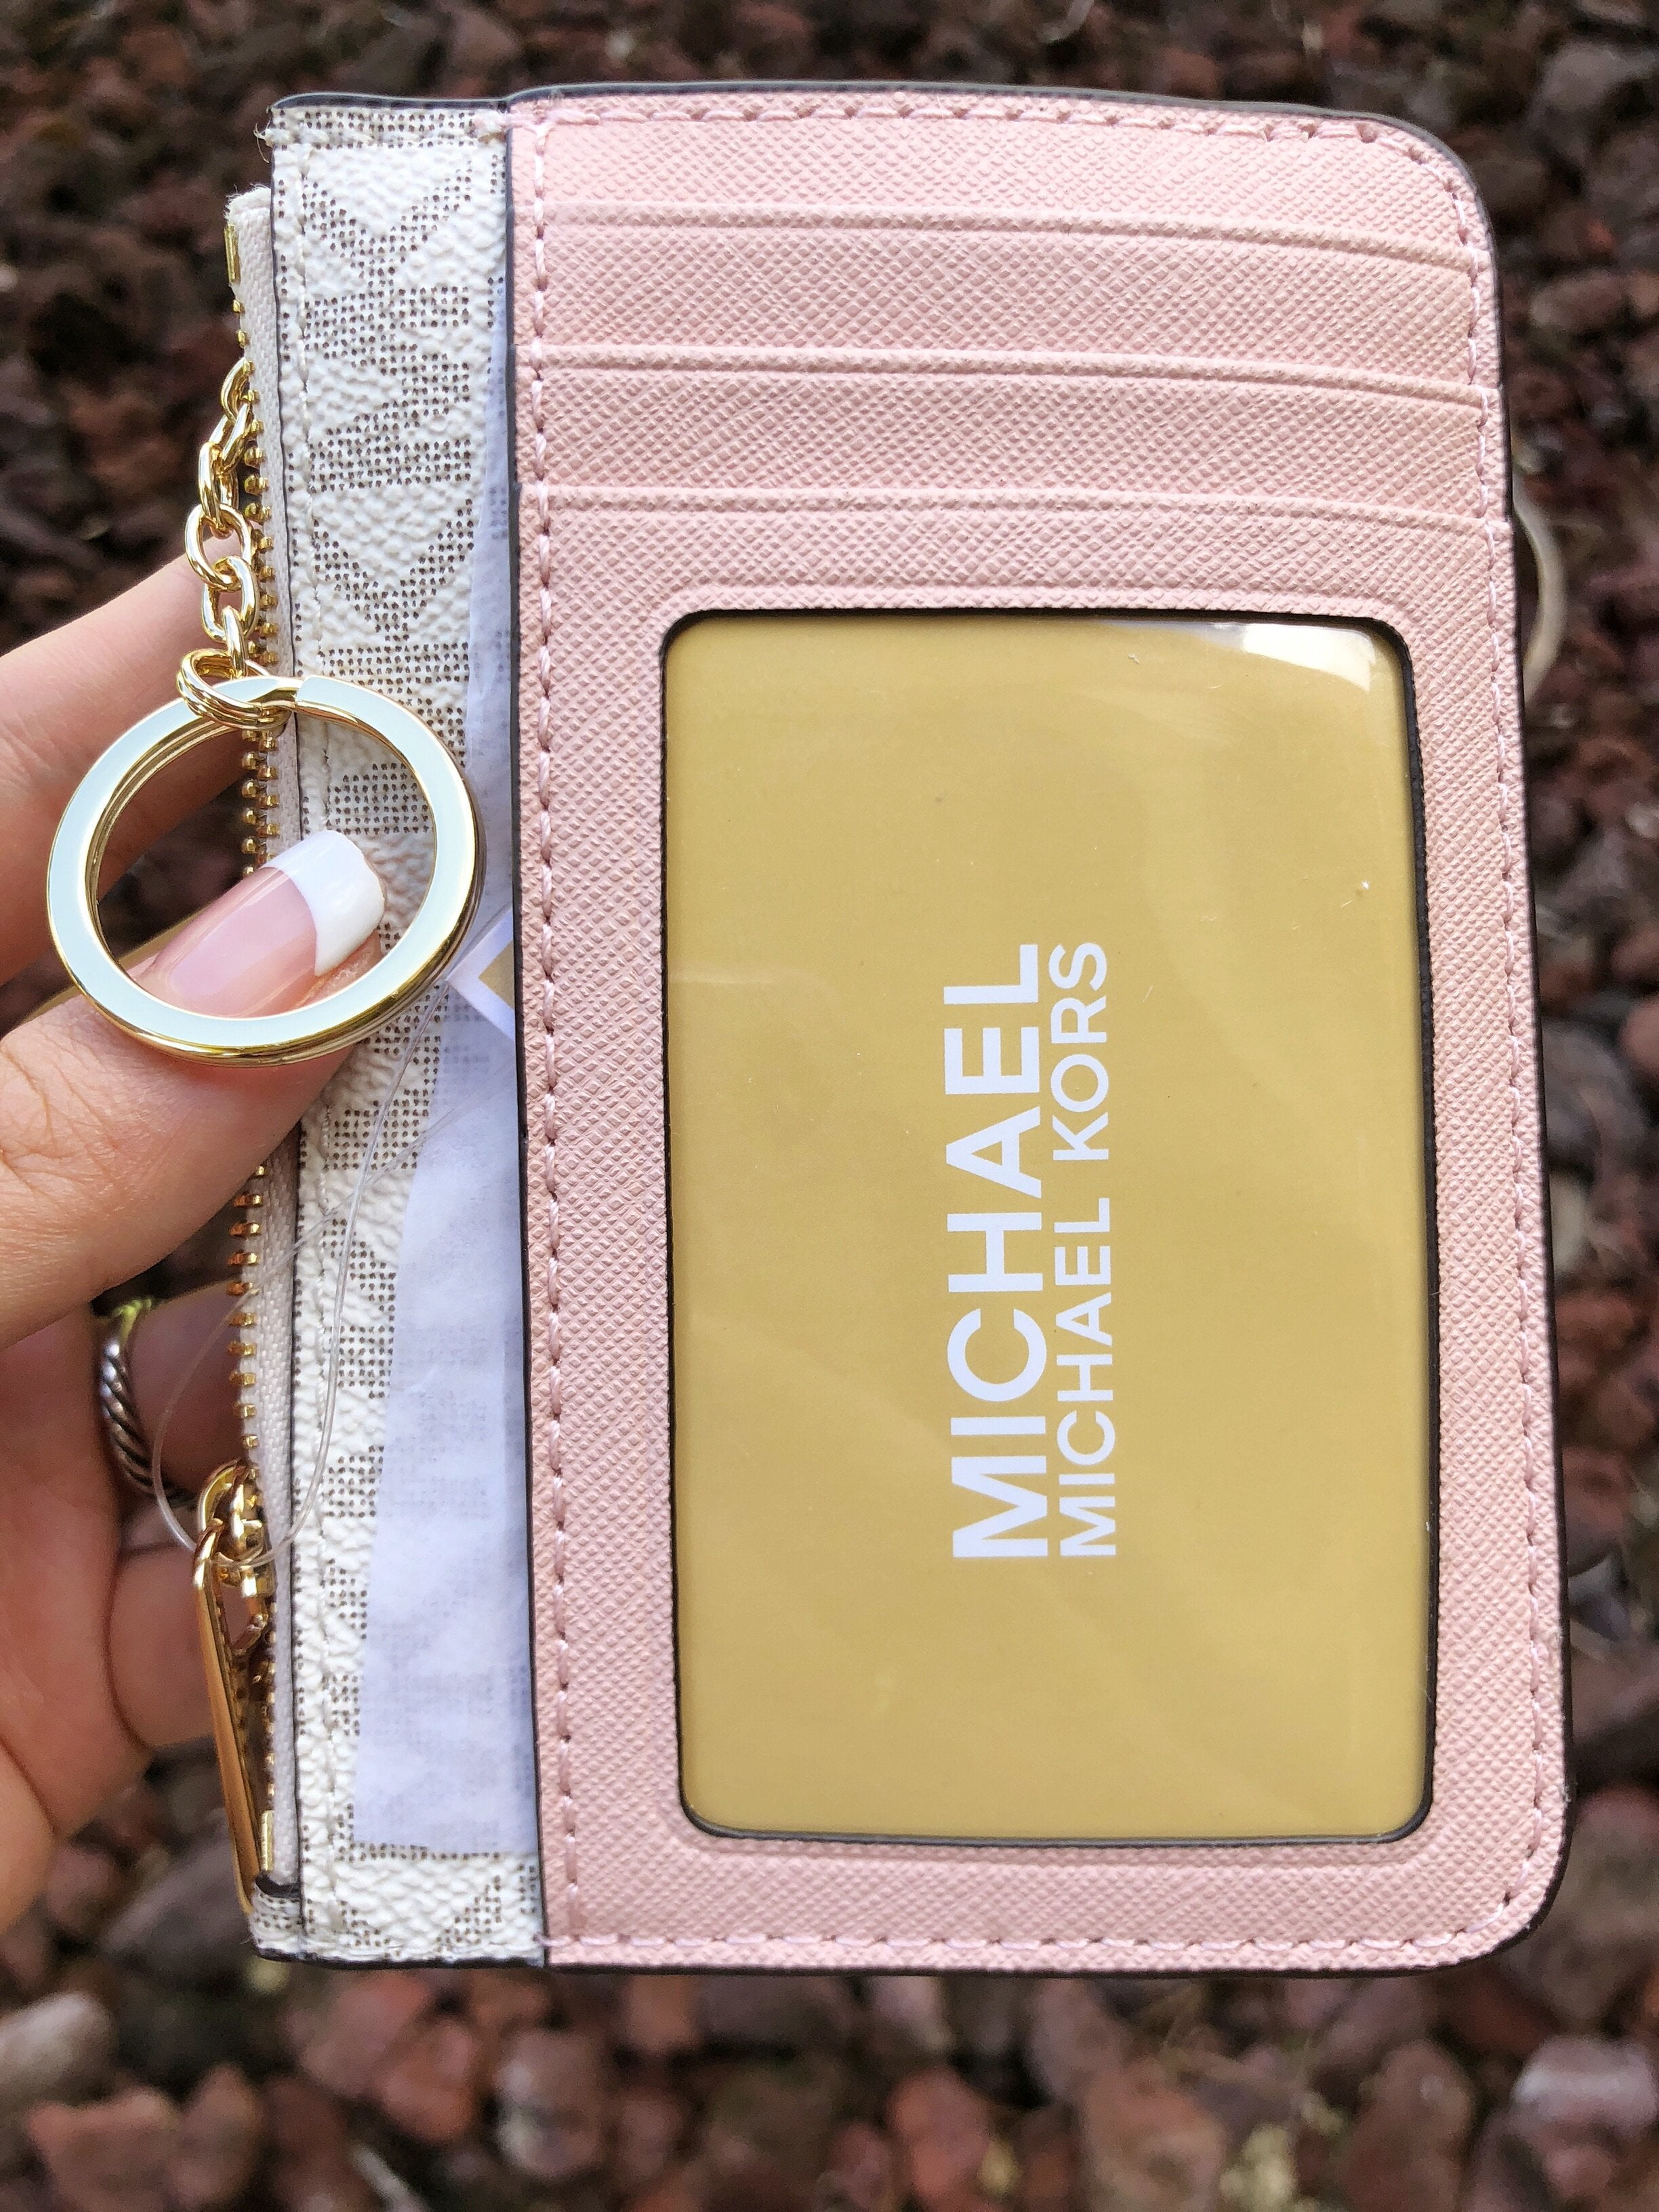 michael kors keychain coin purse